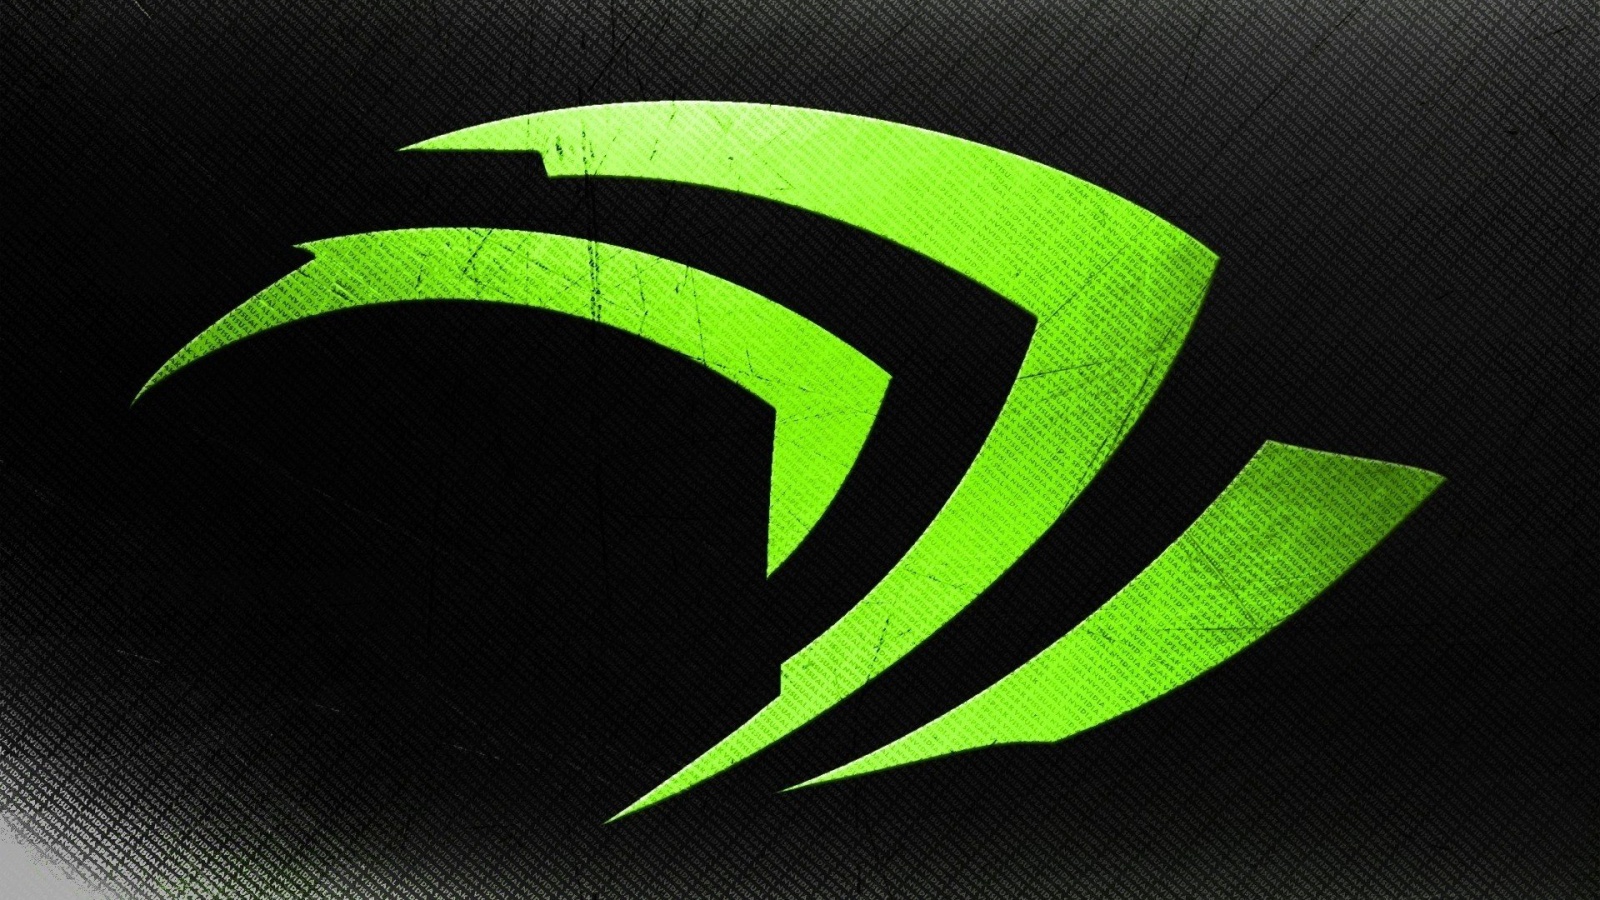 Des download cool hd nvidia logo brand green black background ...